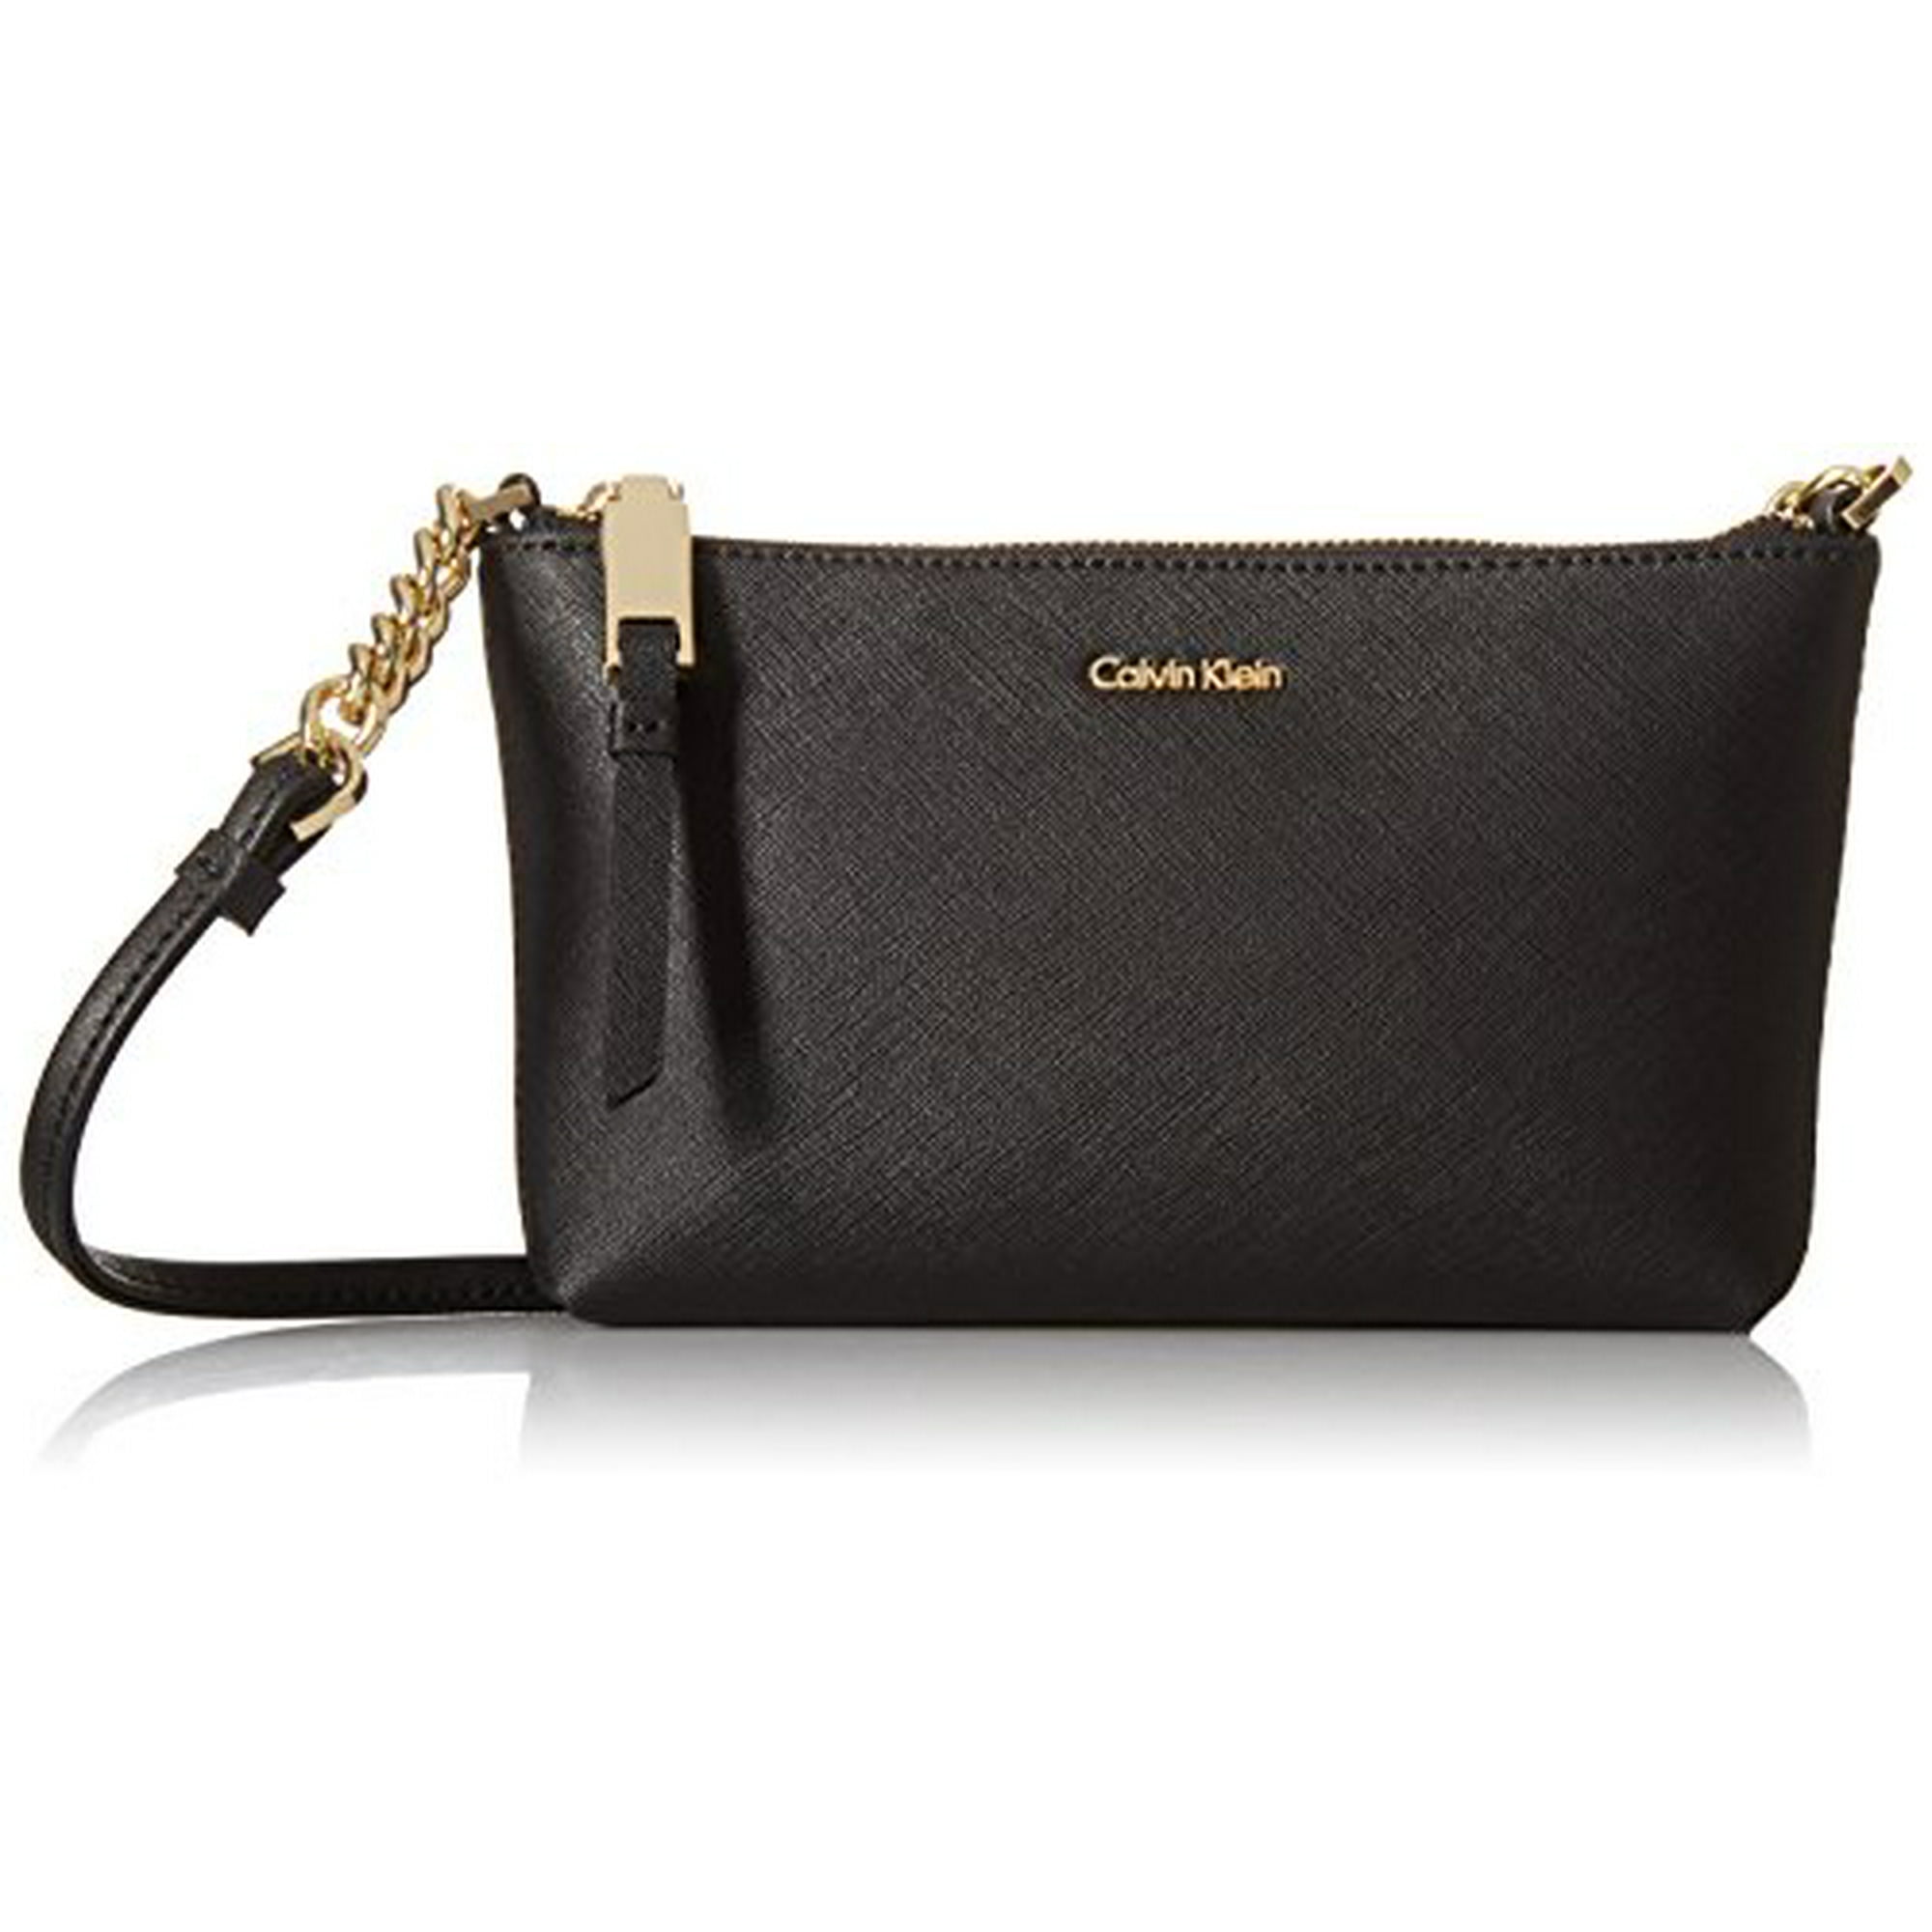 Calvin Klein Hayden Saffiano Large Chain Crossbody, Black/Gold: Handbags